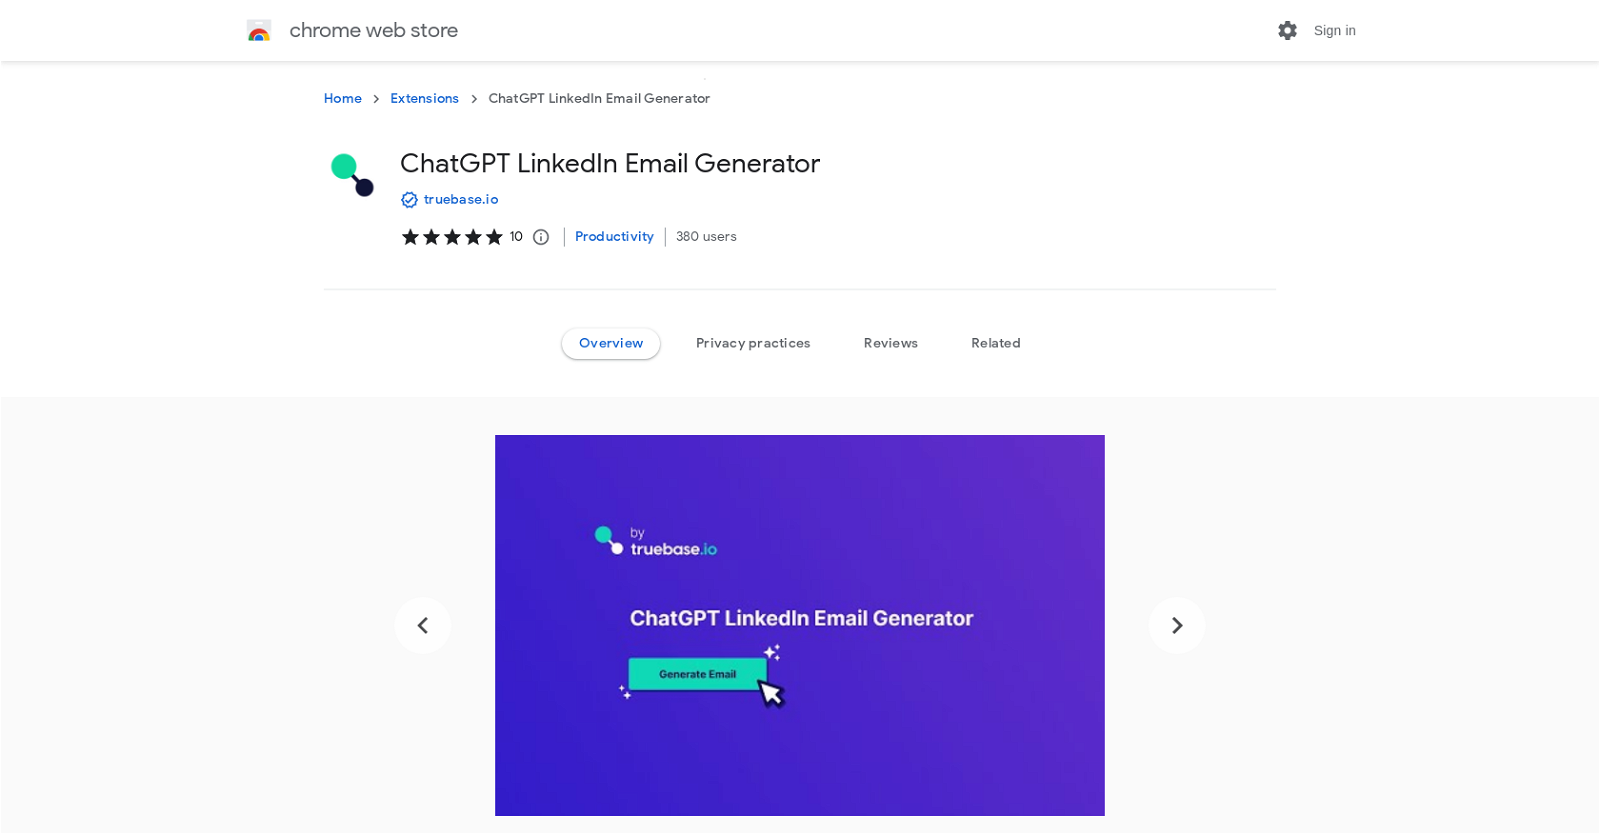 ChatGPT LinkedIn Email Generator